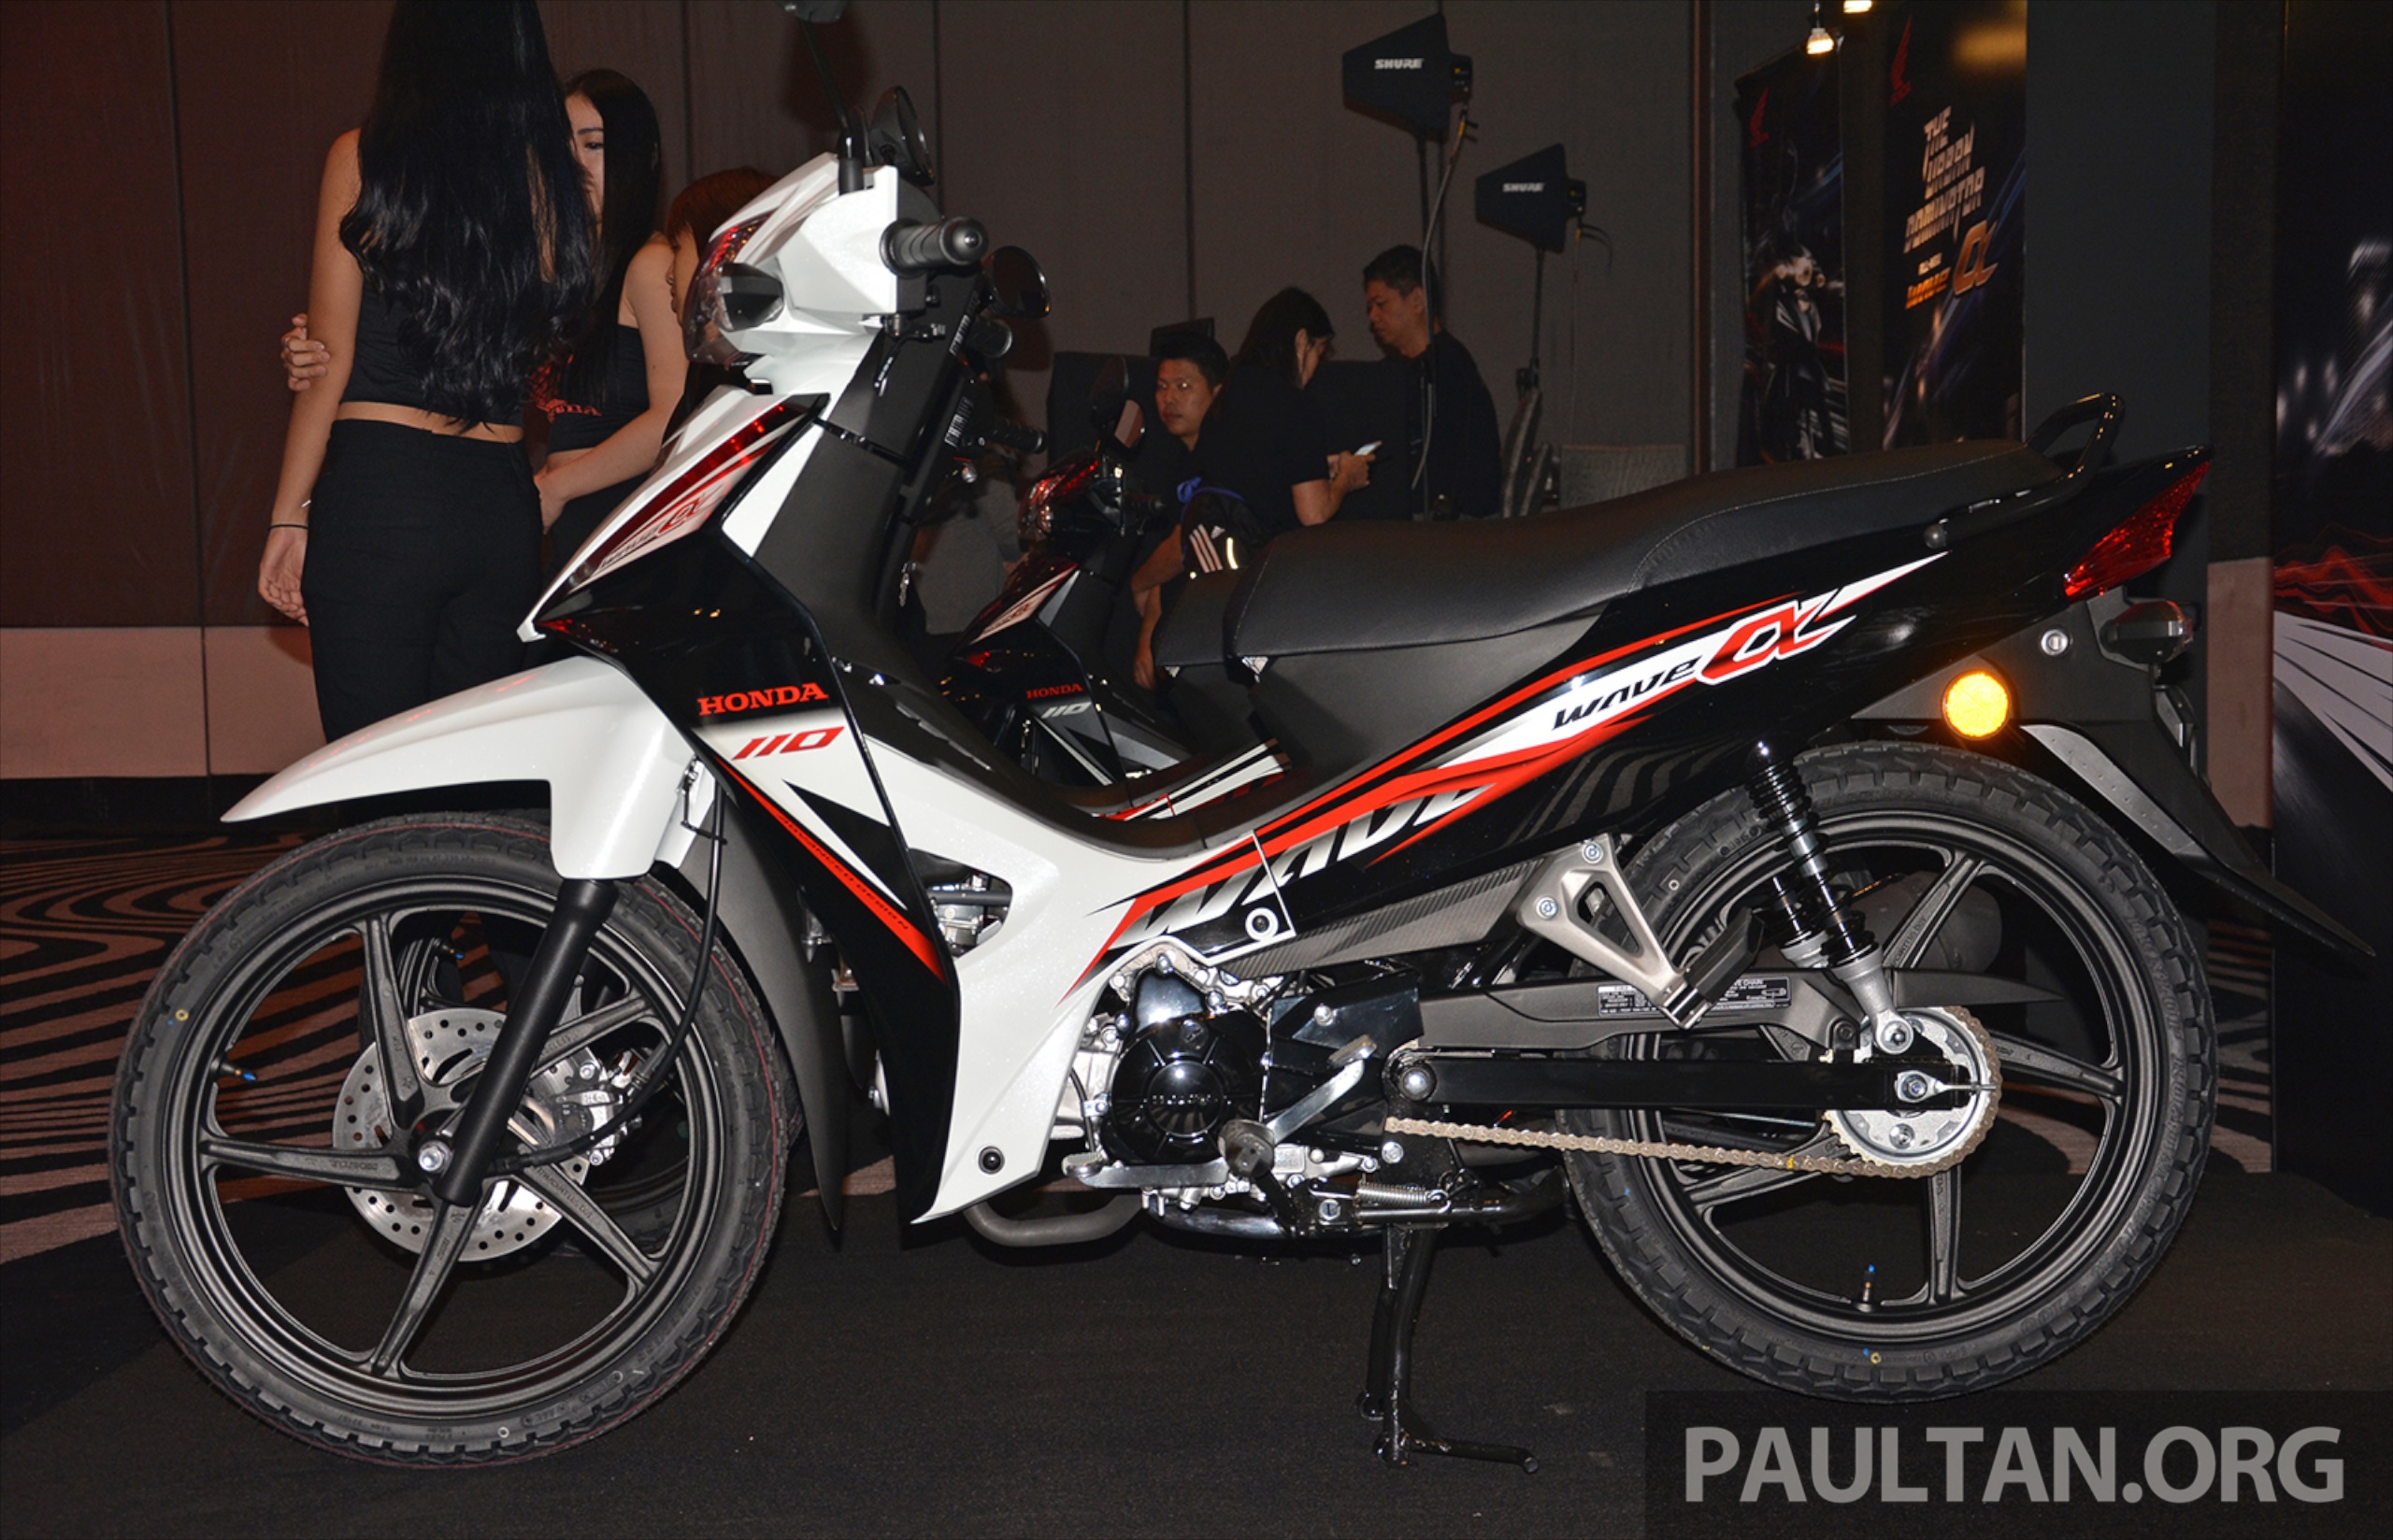 Honda Wave Alpha 110cc kapcai launched, fr RM4,133 Paul Tan - Image 408567